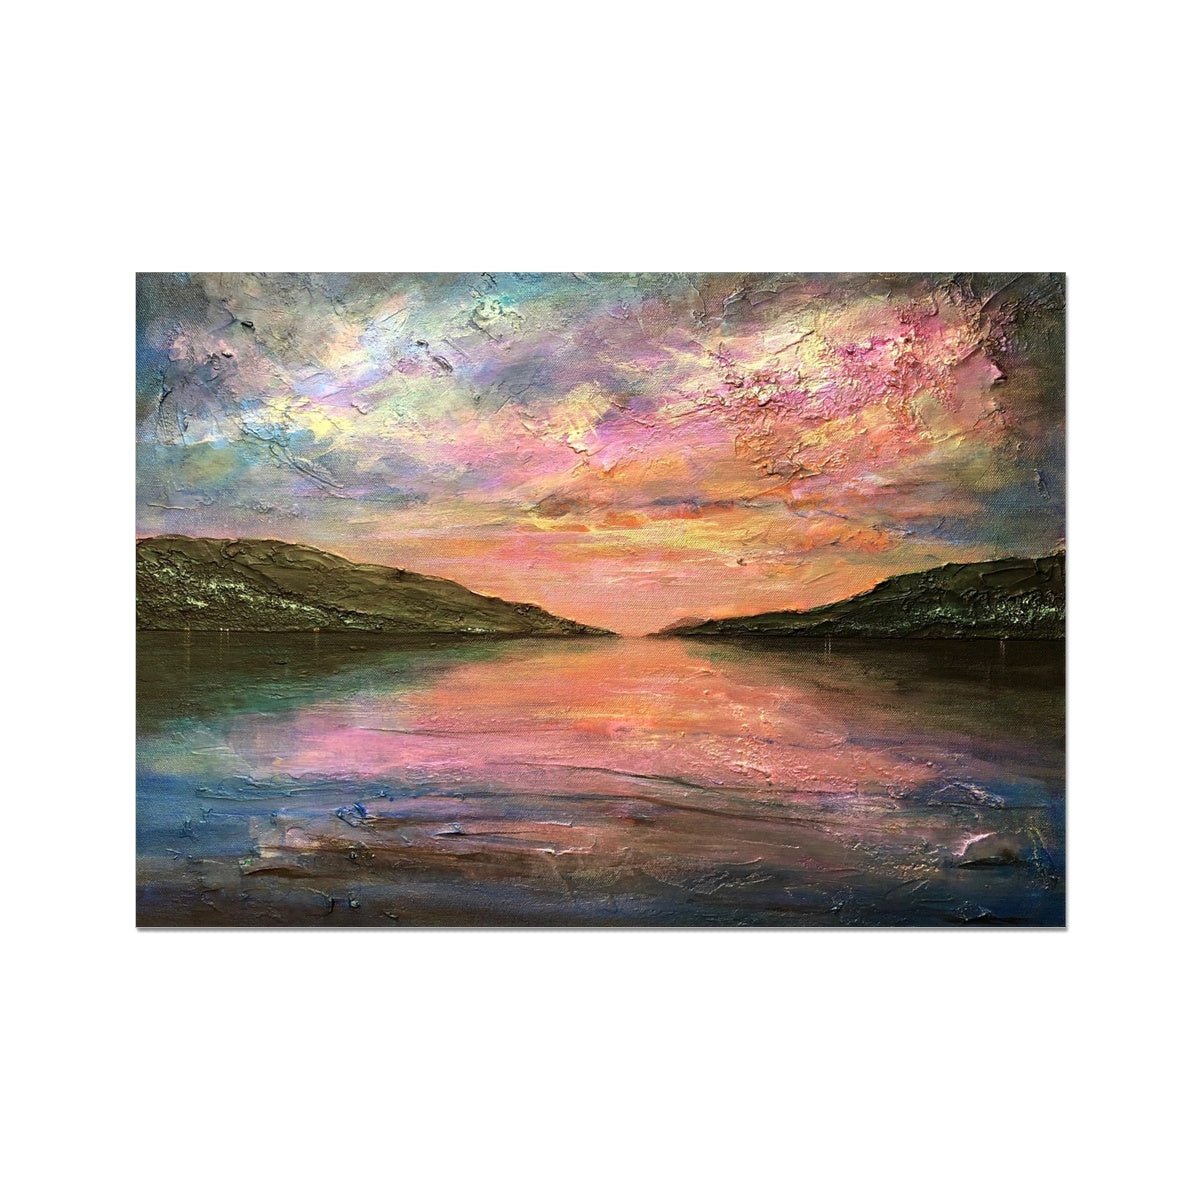 Loch Ness Dawn Painting | Fine Art Prints From Scotland-Unframed Prints-Scottish Lochs & Mountains Art Gallery-A2 Landscape-Paintings, Prints, Homeware, Art Gifts From Scotland By Scottish Artist Kevin Hunter